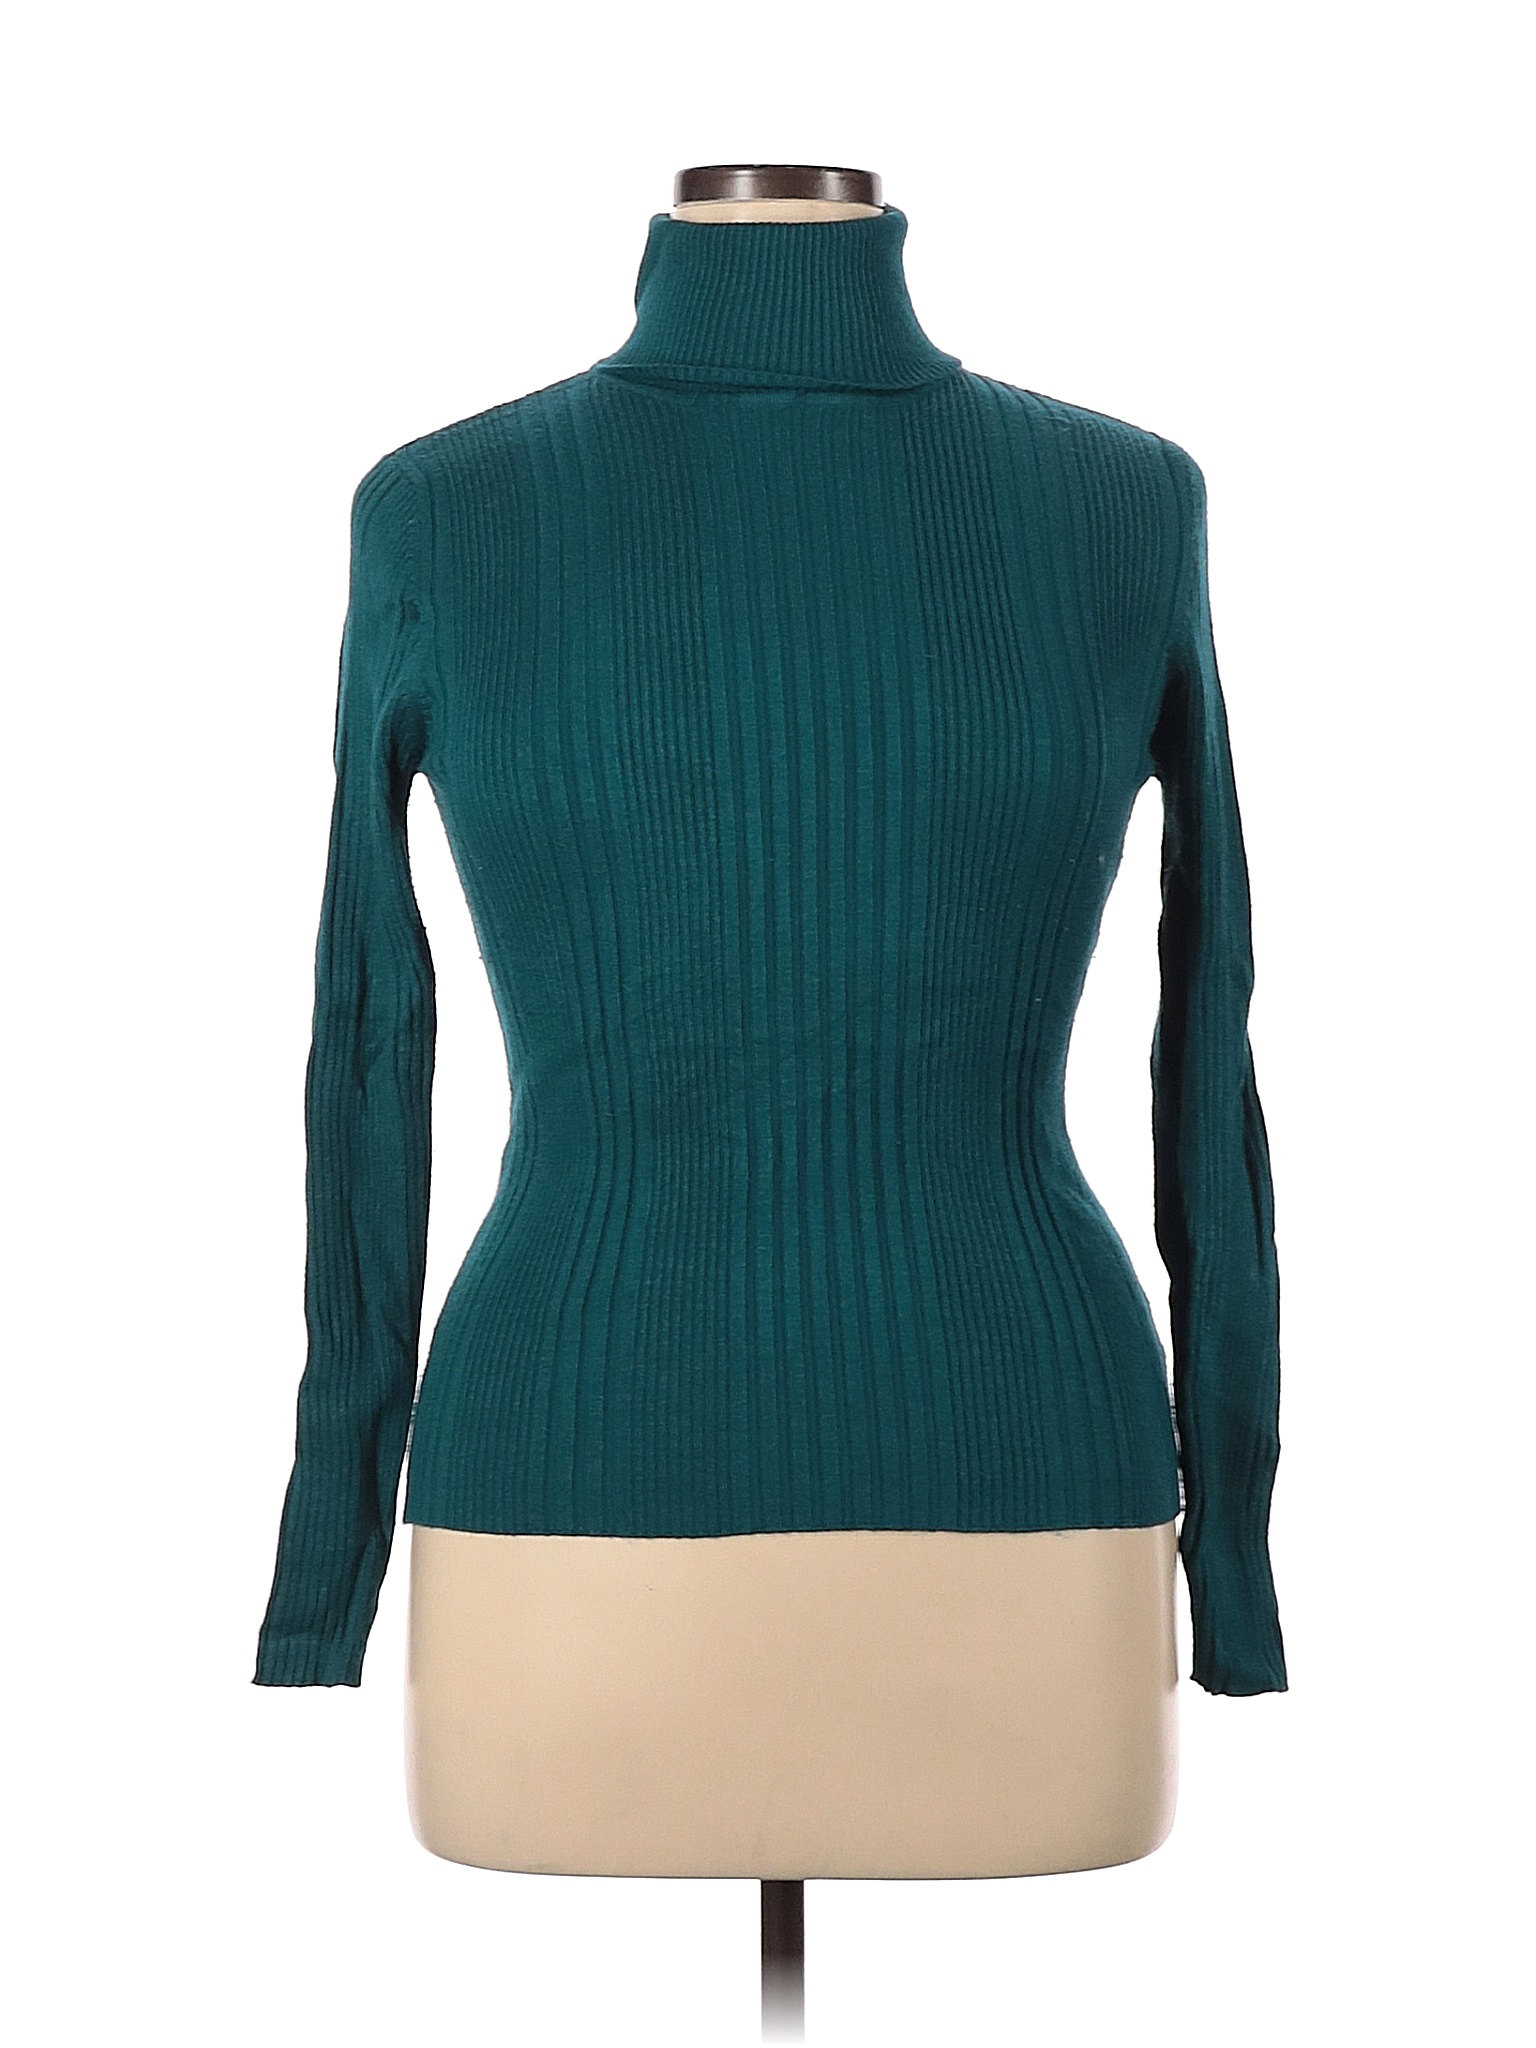 No Boundaries Solid Teal Turtleneck Sweater Size XL - 66% off | thredUP